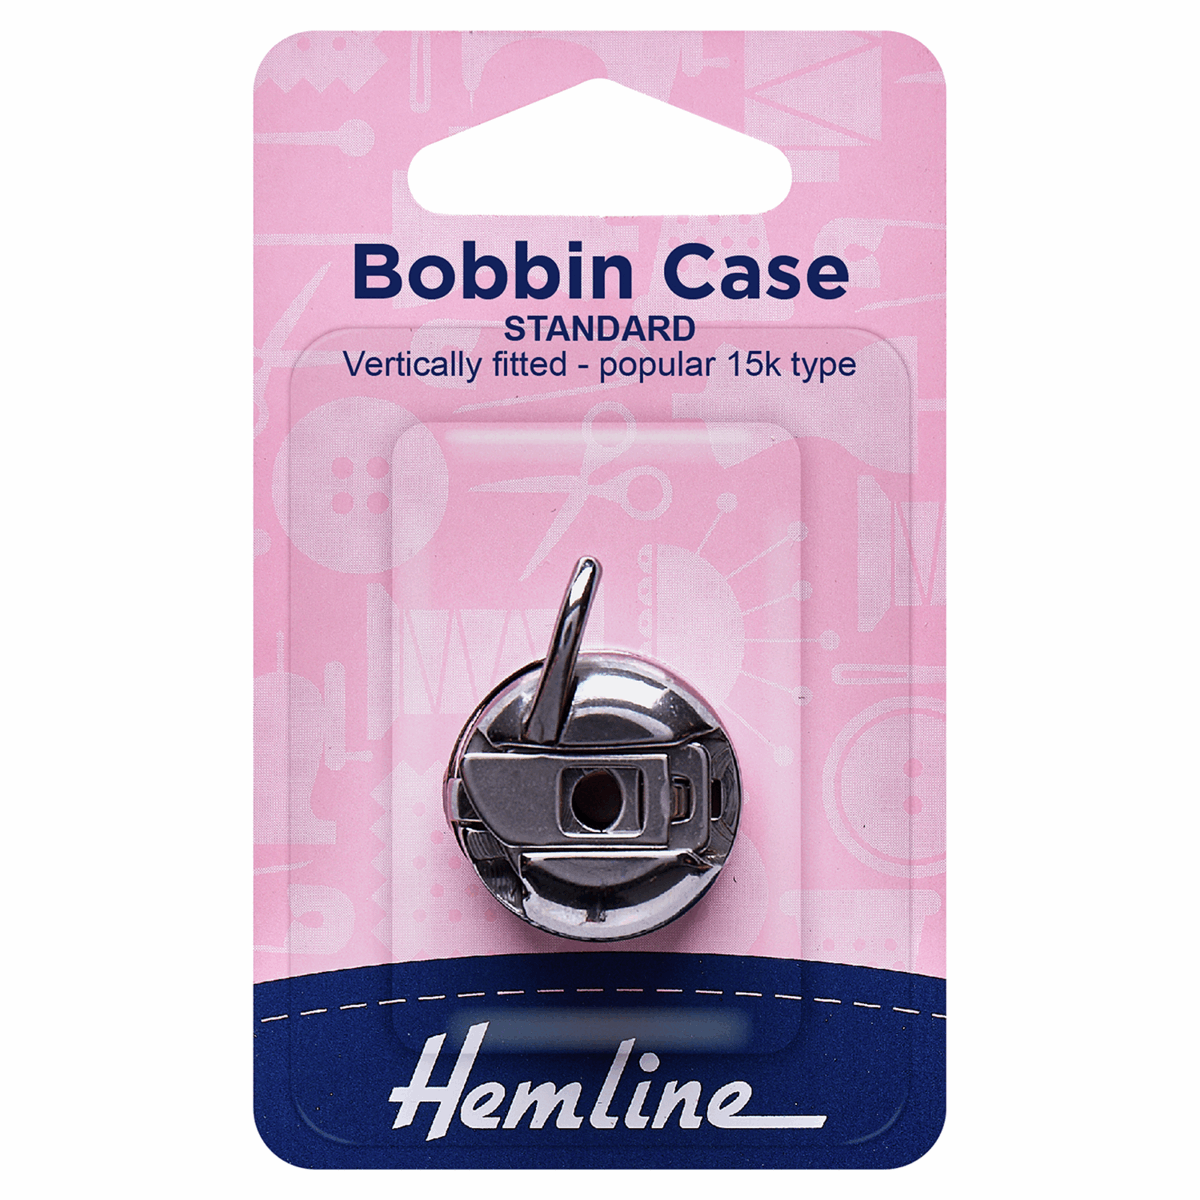 Hemline - Bobbin Case